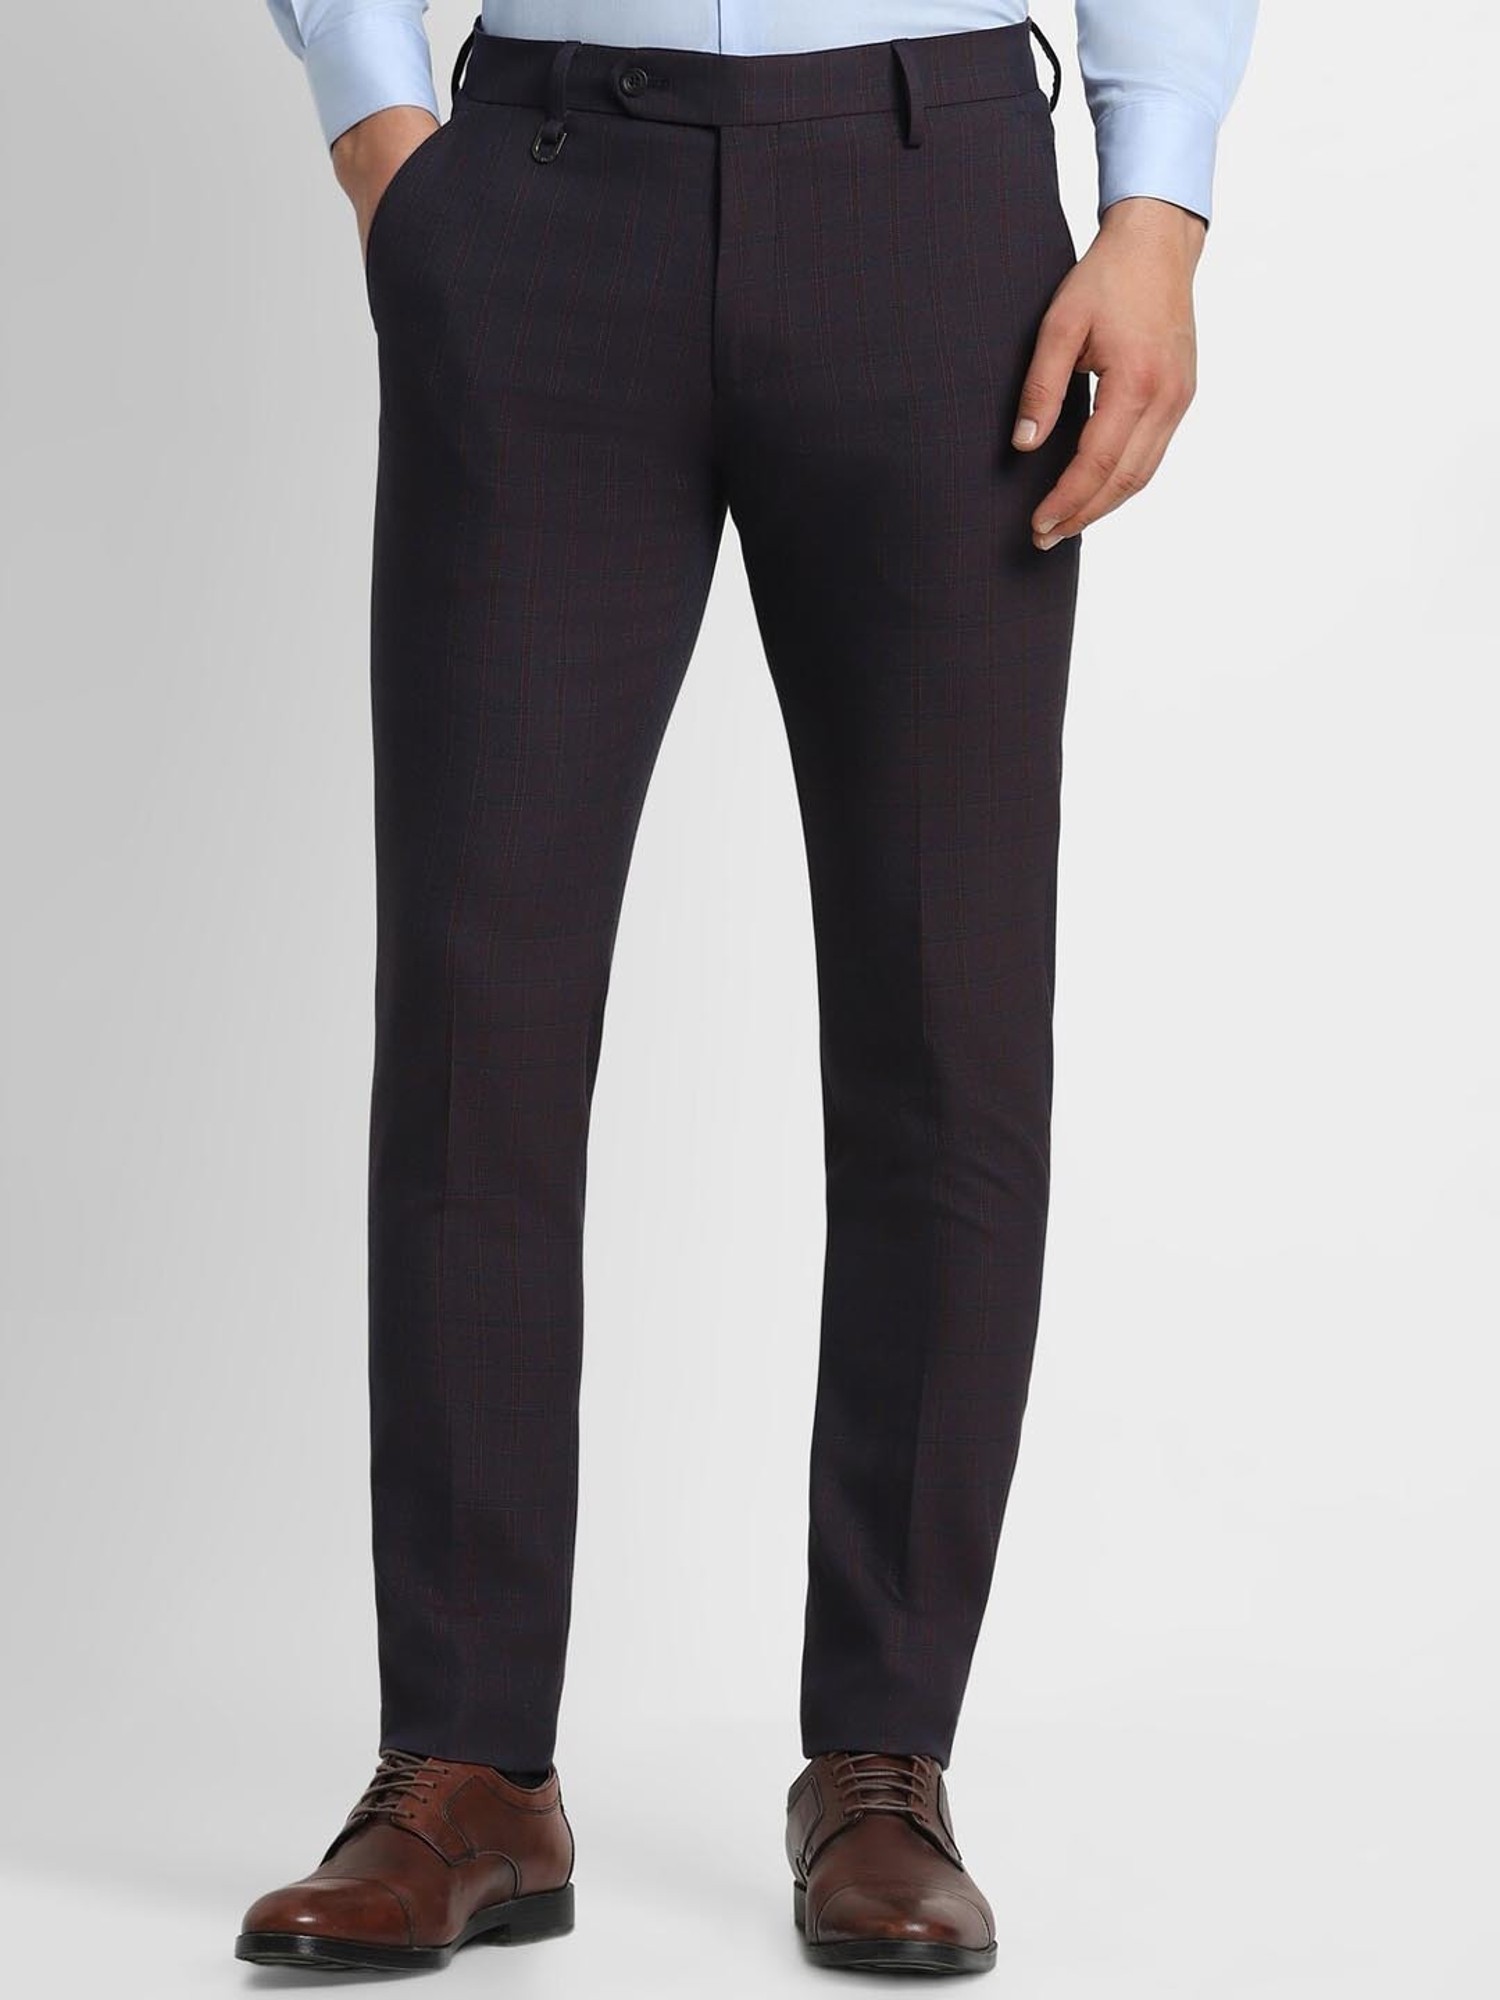 Smarty Pants women's cotton lycra ankle length camel brown formal trouser